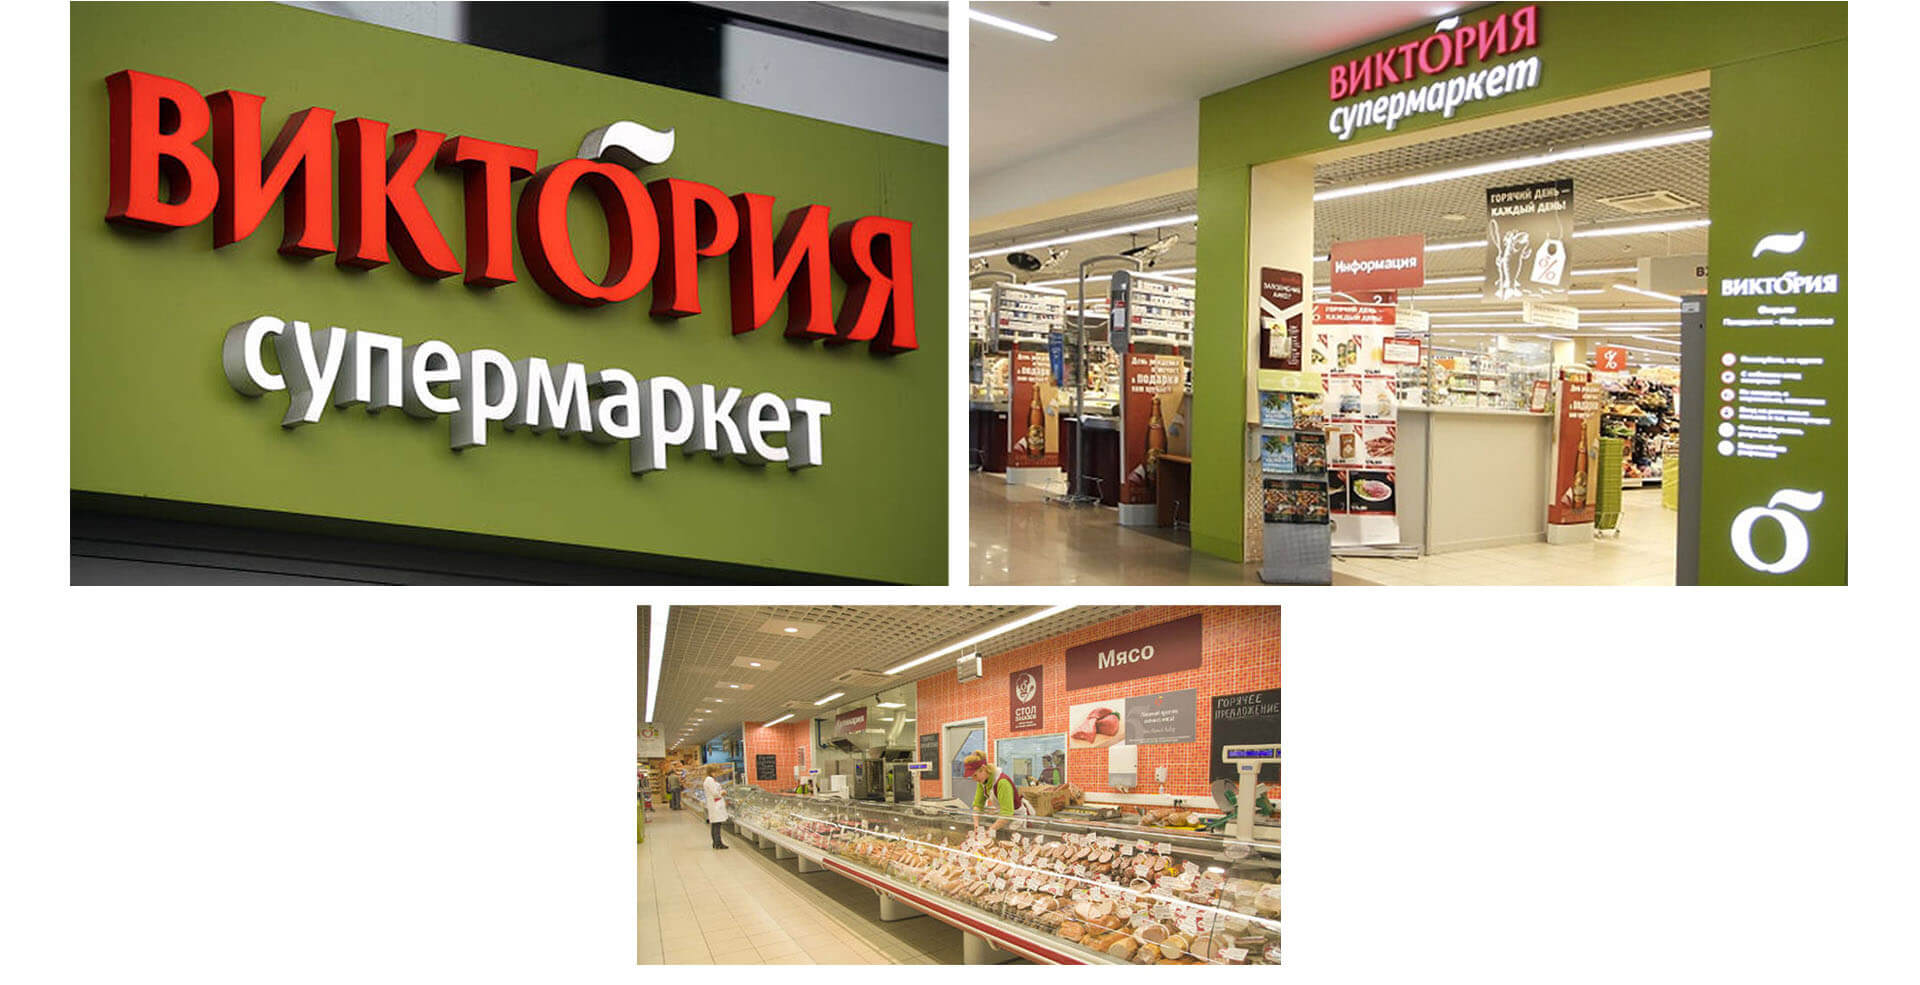 Victoria supermarkets Russian brand identity to store entrances